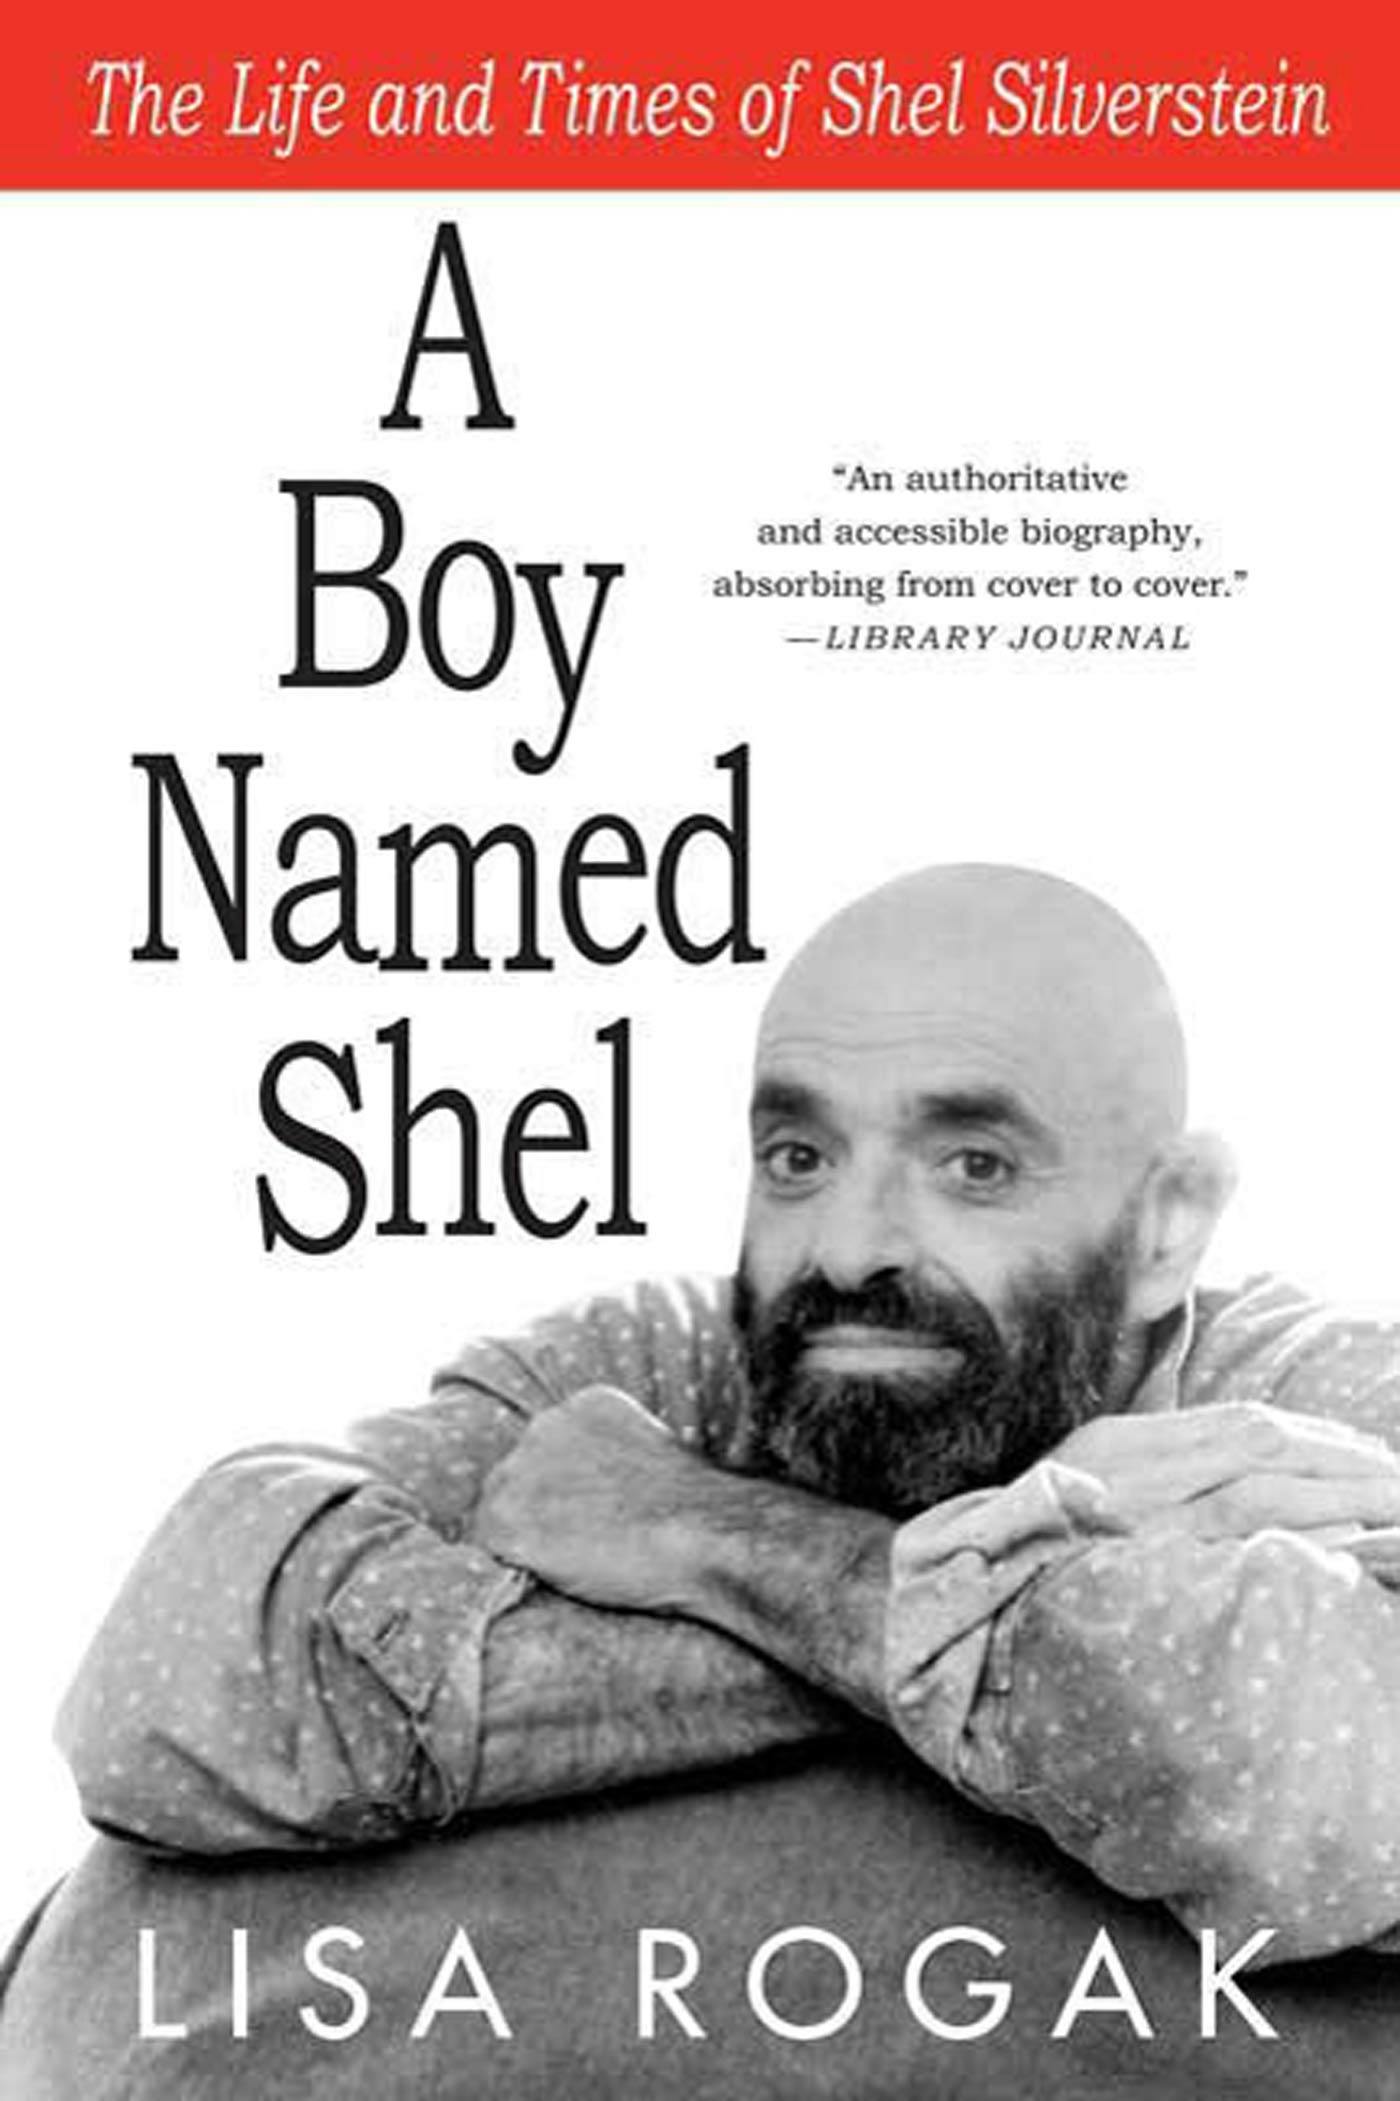 A Boy Named Shel